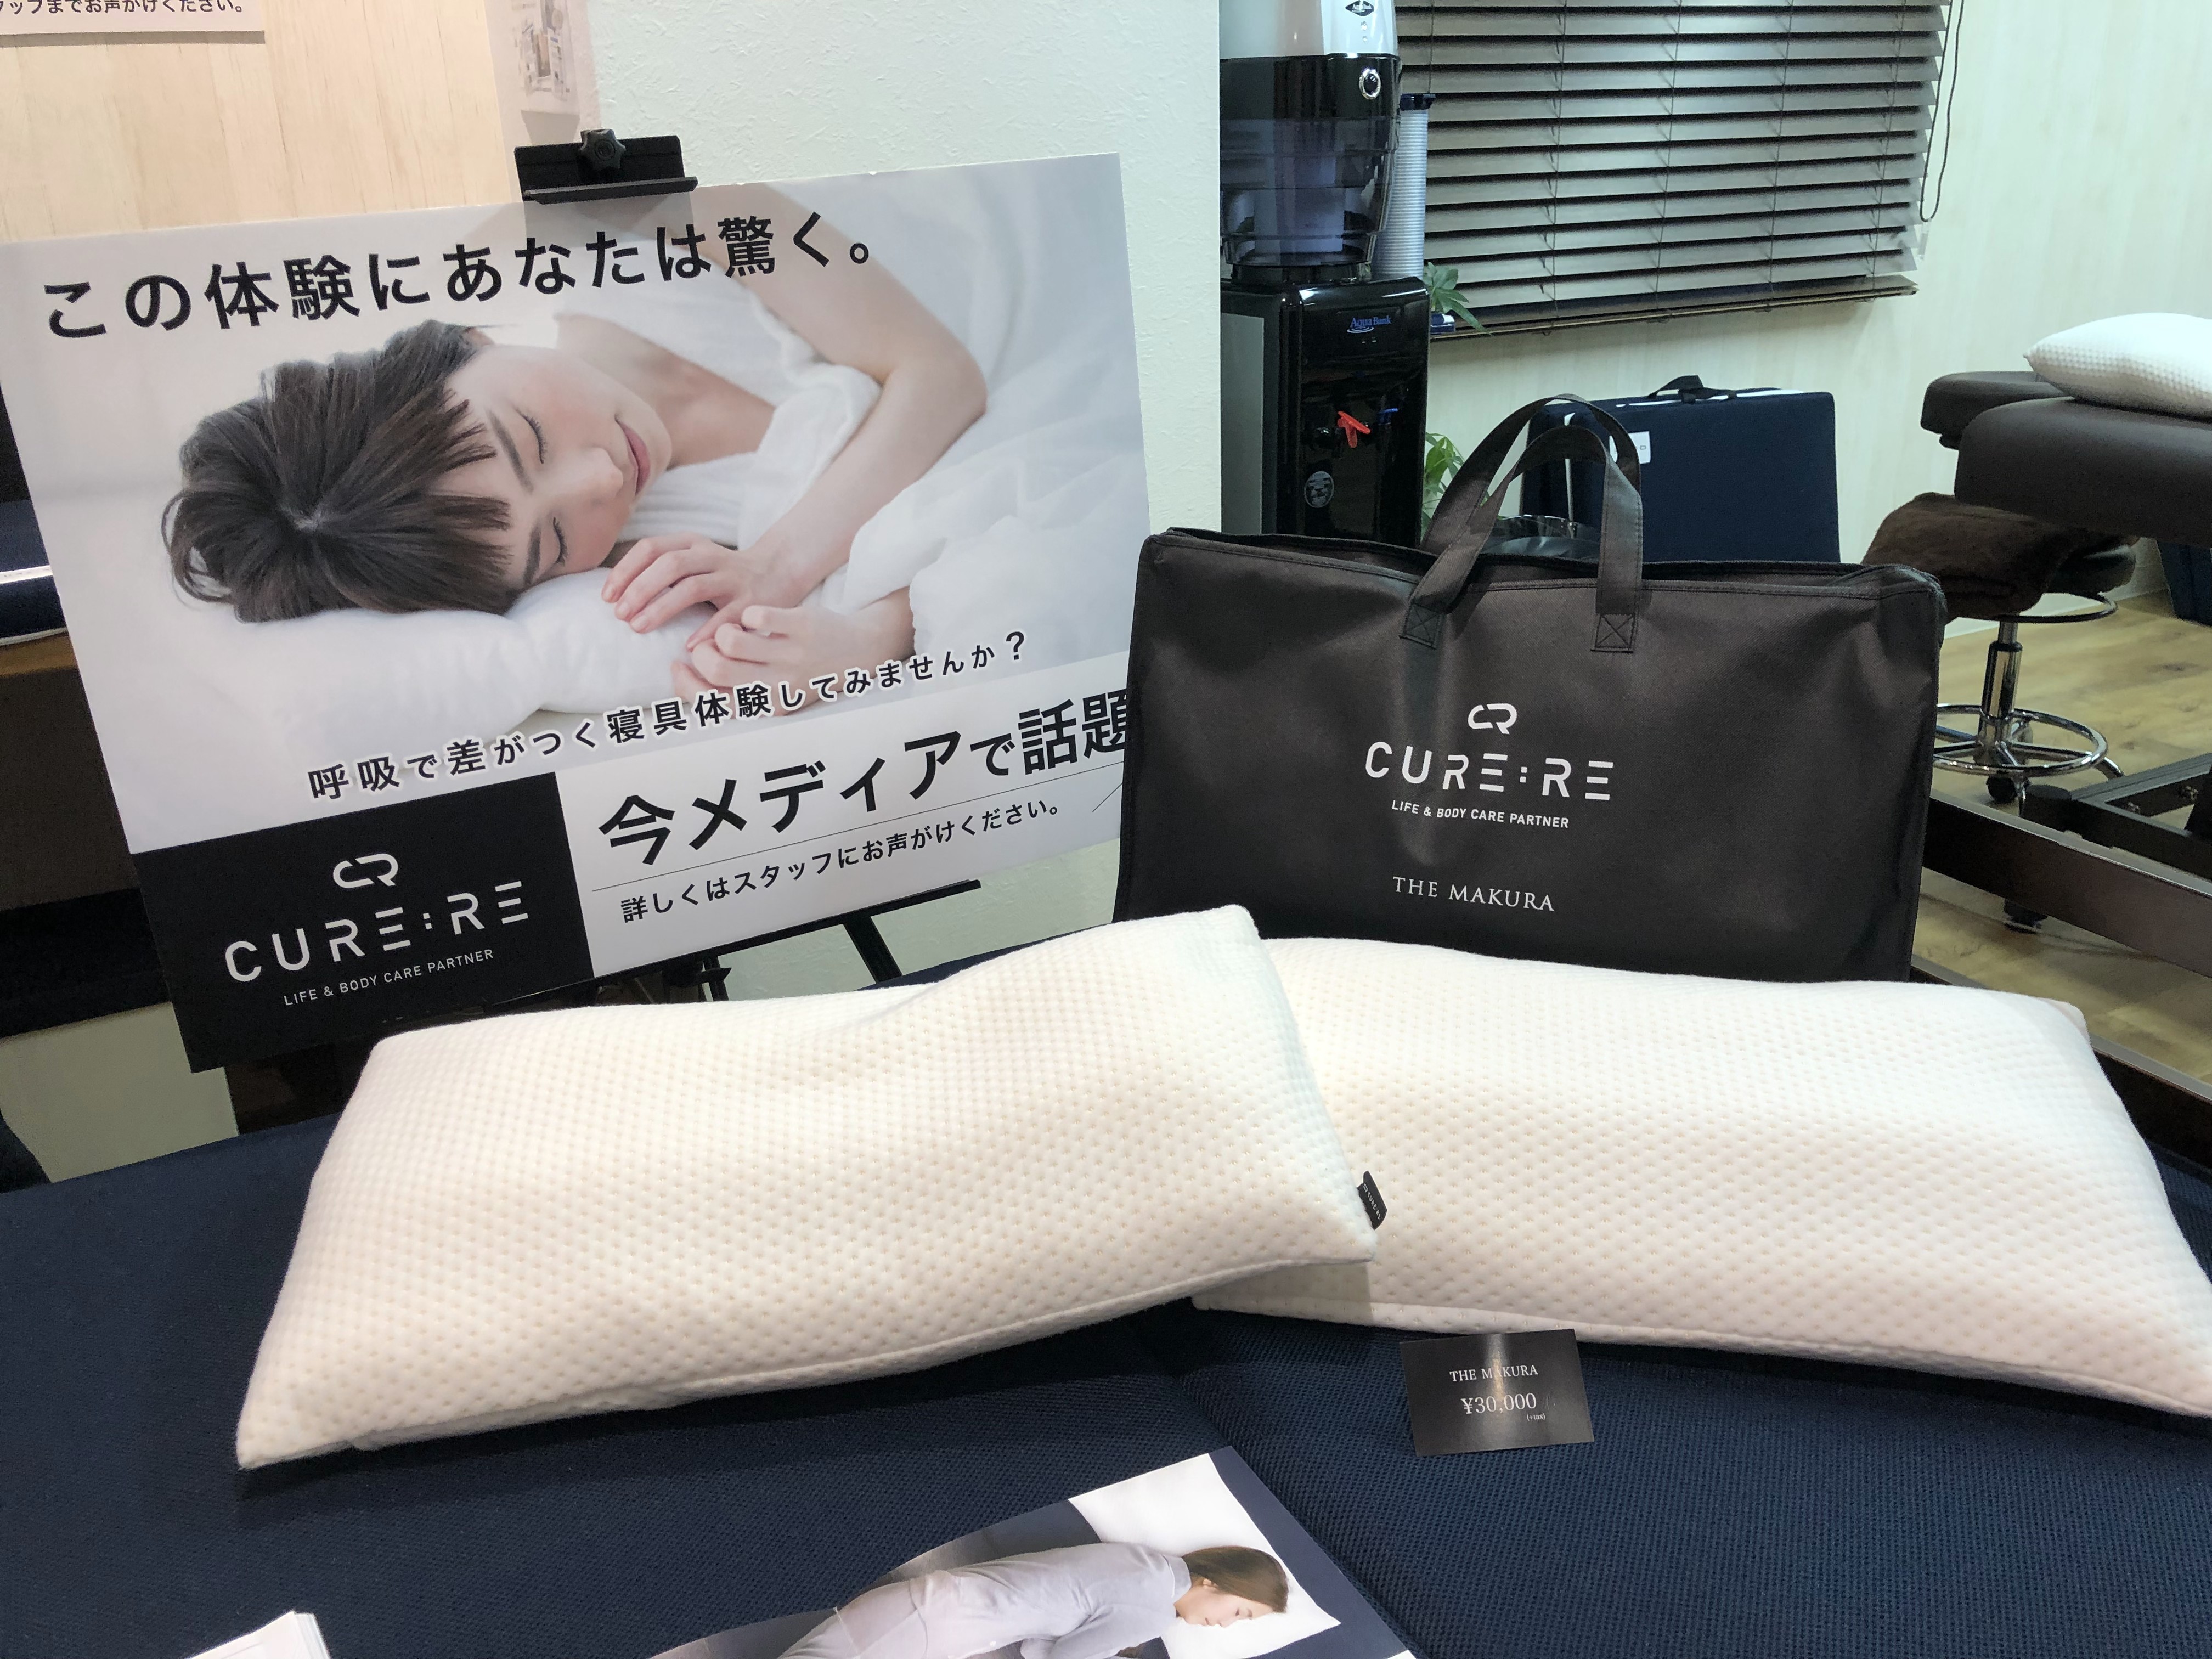 THE MAKURA キュアレ CURE:RE 枕 - 枕